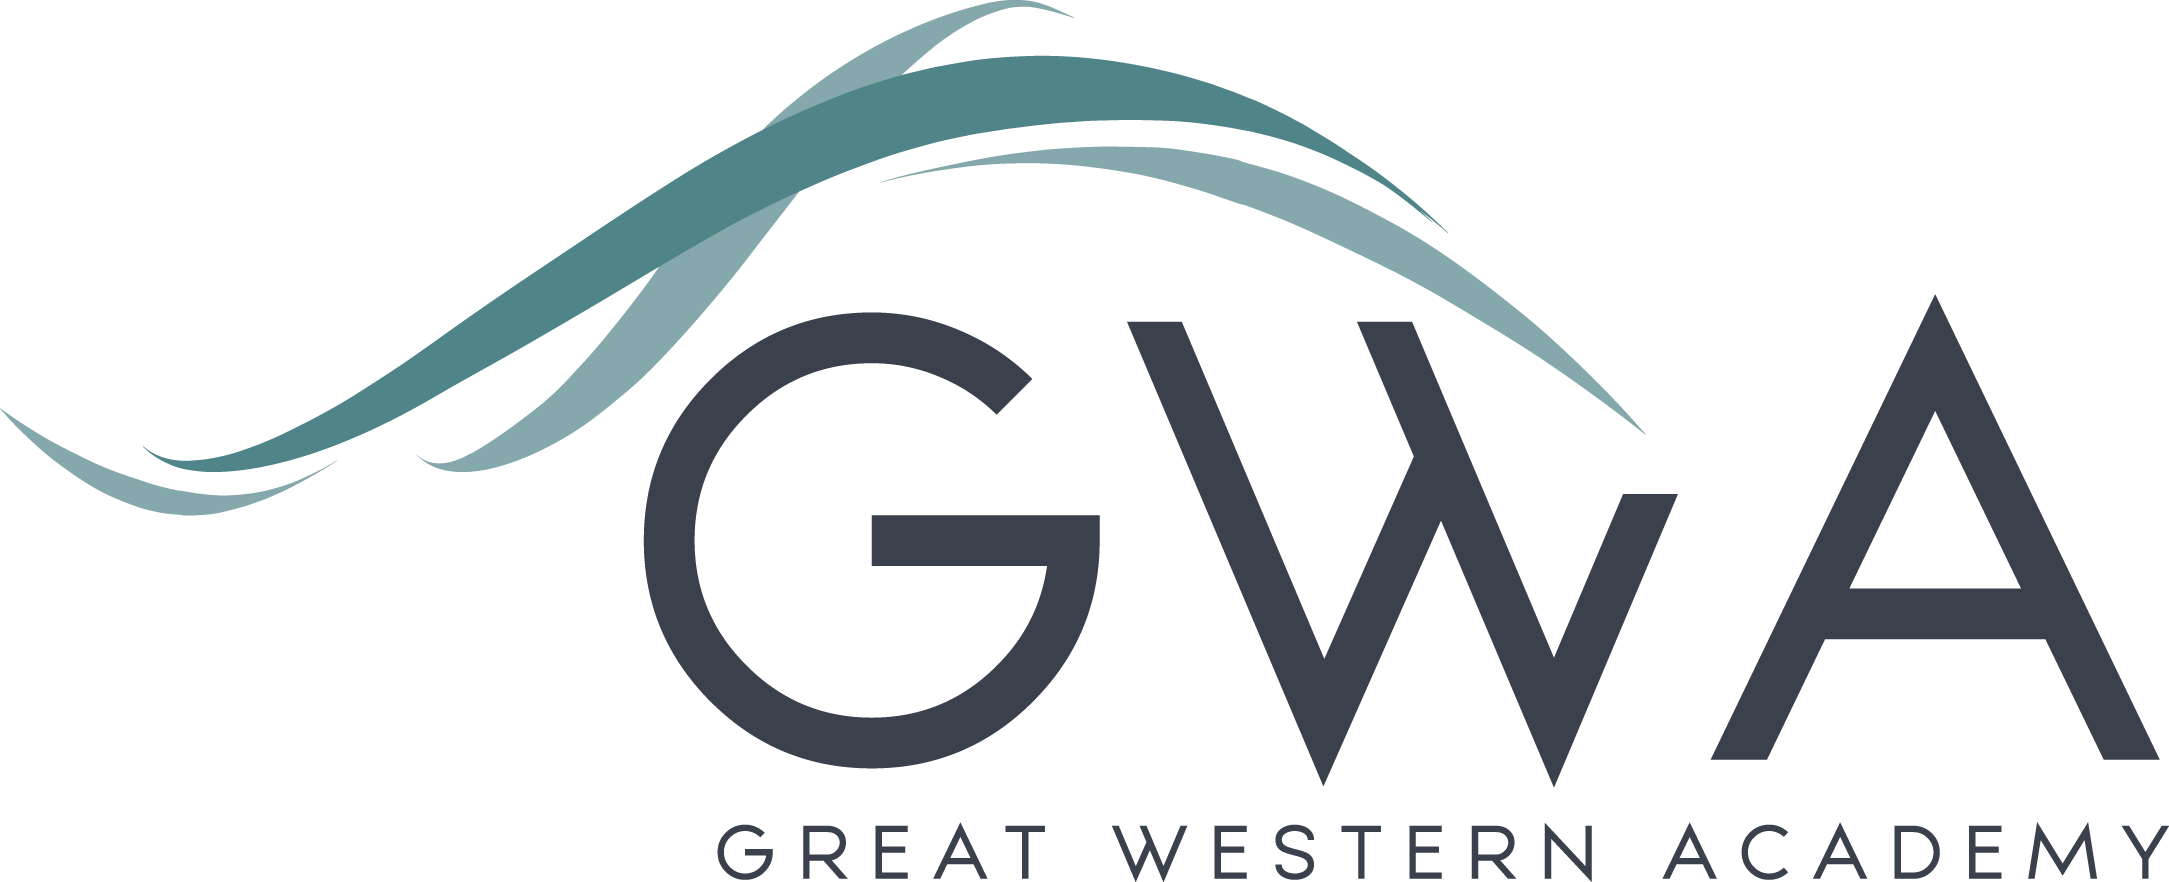 Great Western Academy校徽